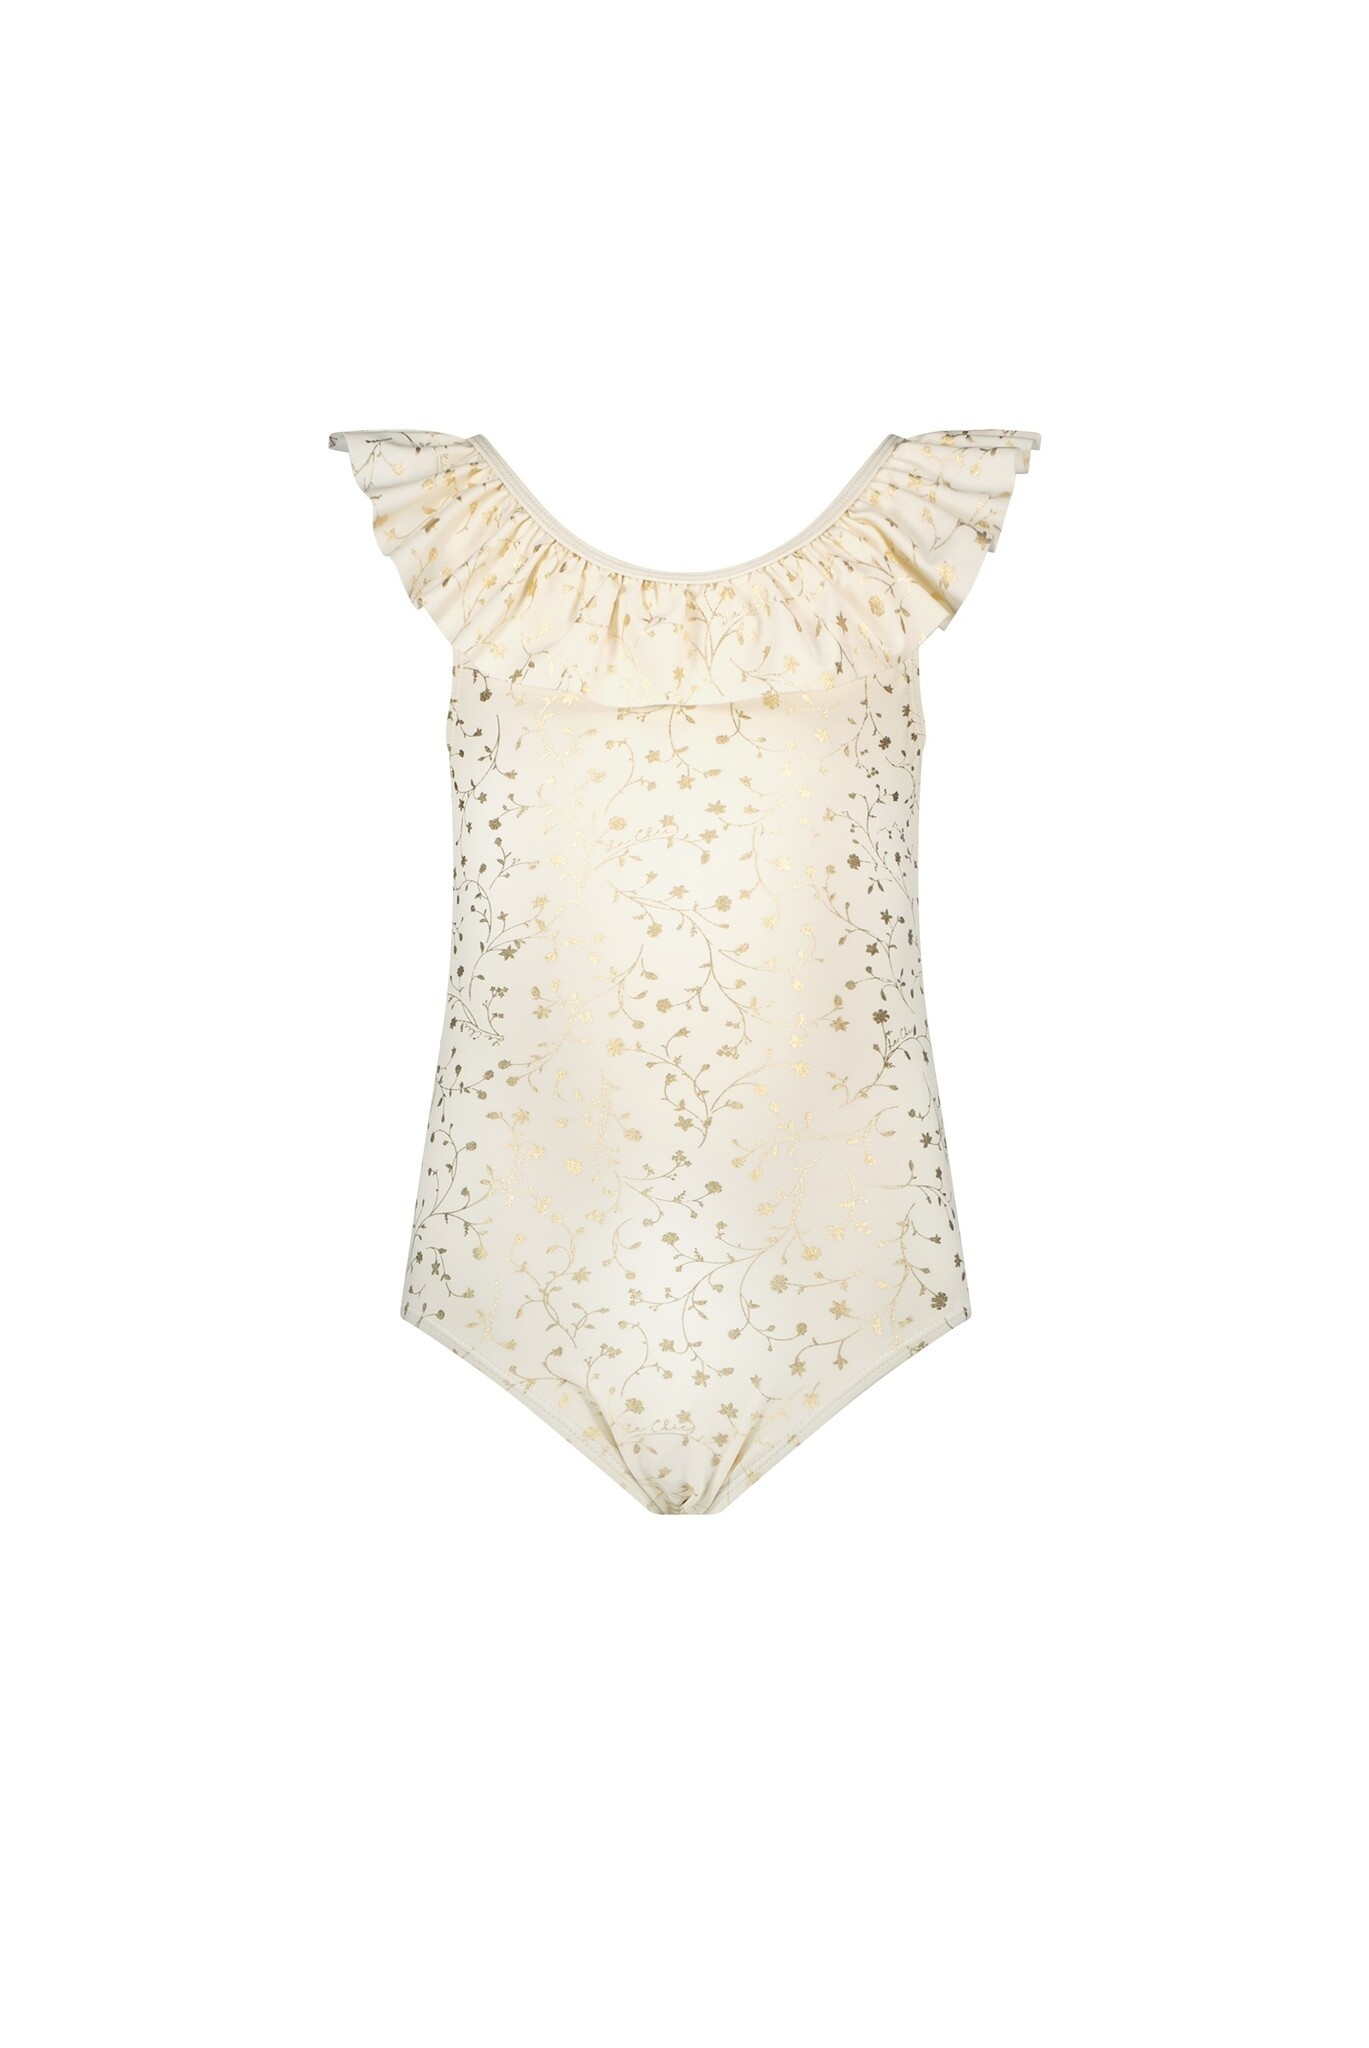 Le Chic C401-5051 Meisjes Jumpsuit - Pearled Ivory - Maat 140